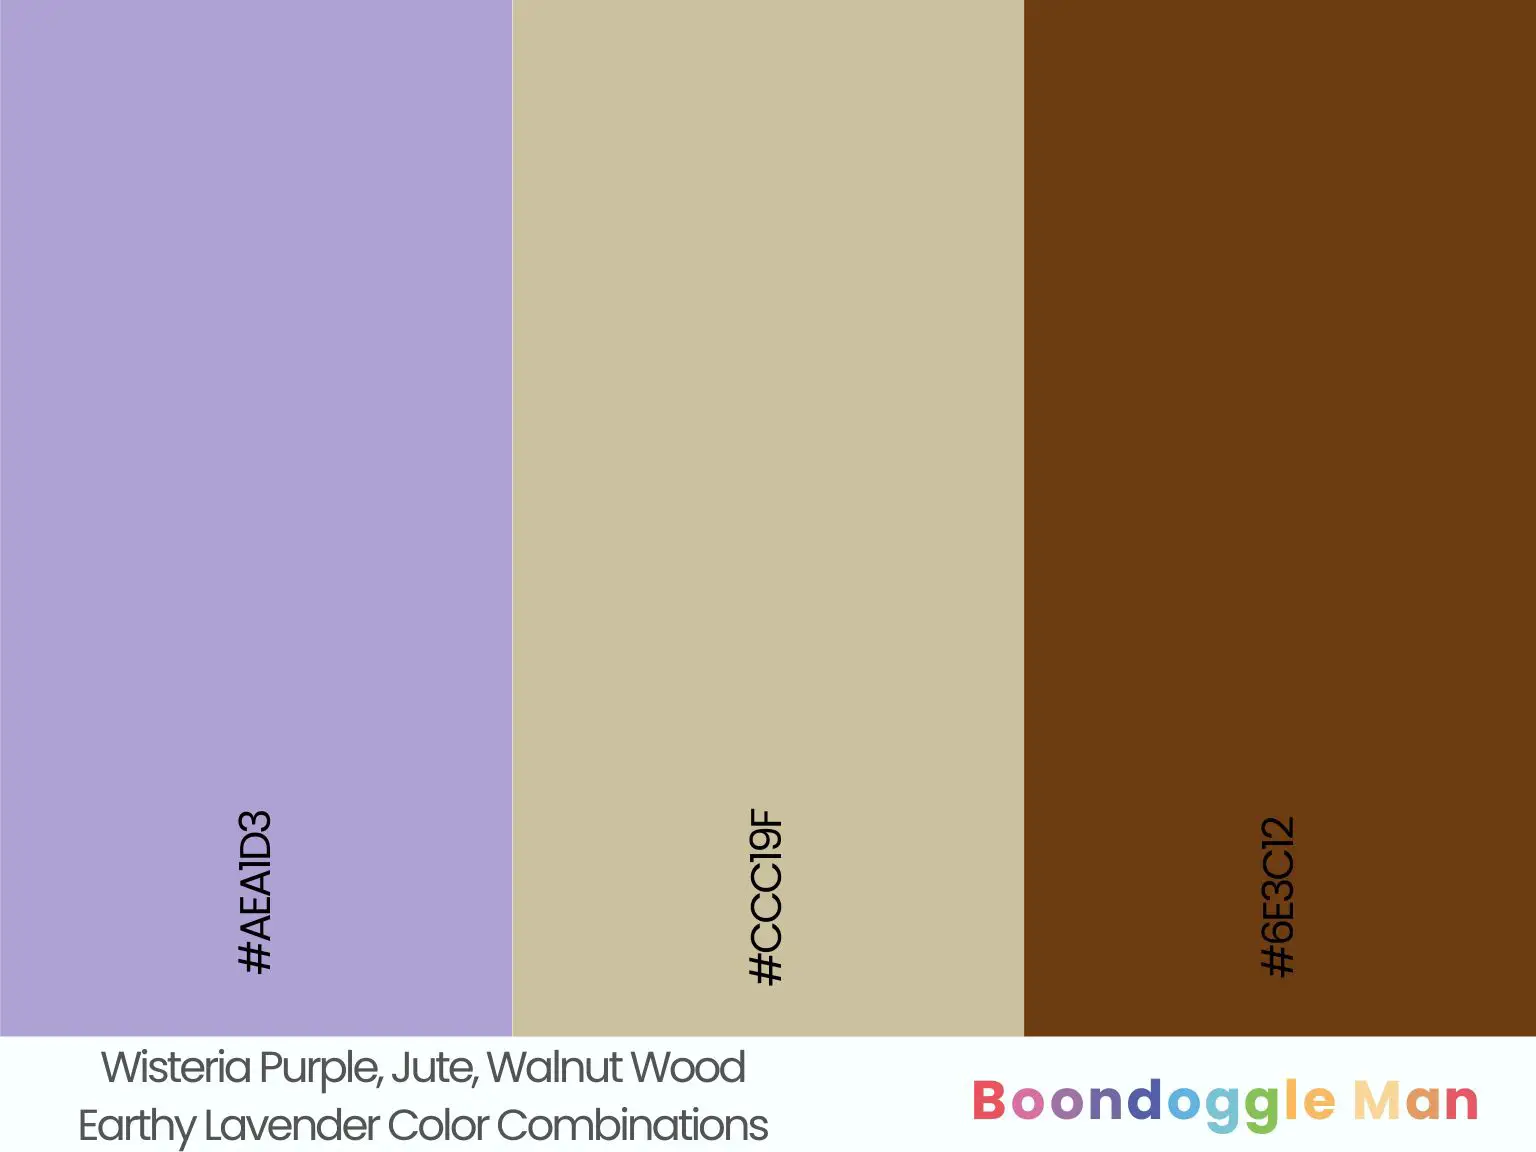 Wisteria Purple, Jute, Walnut Wood